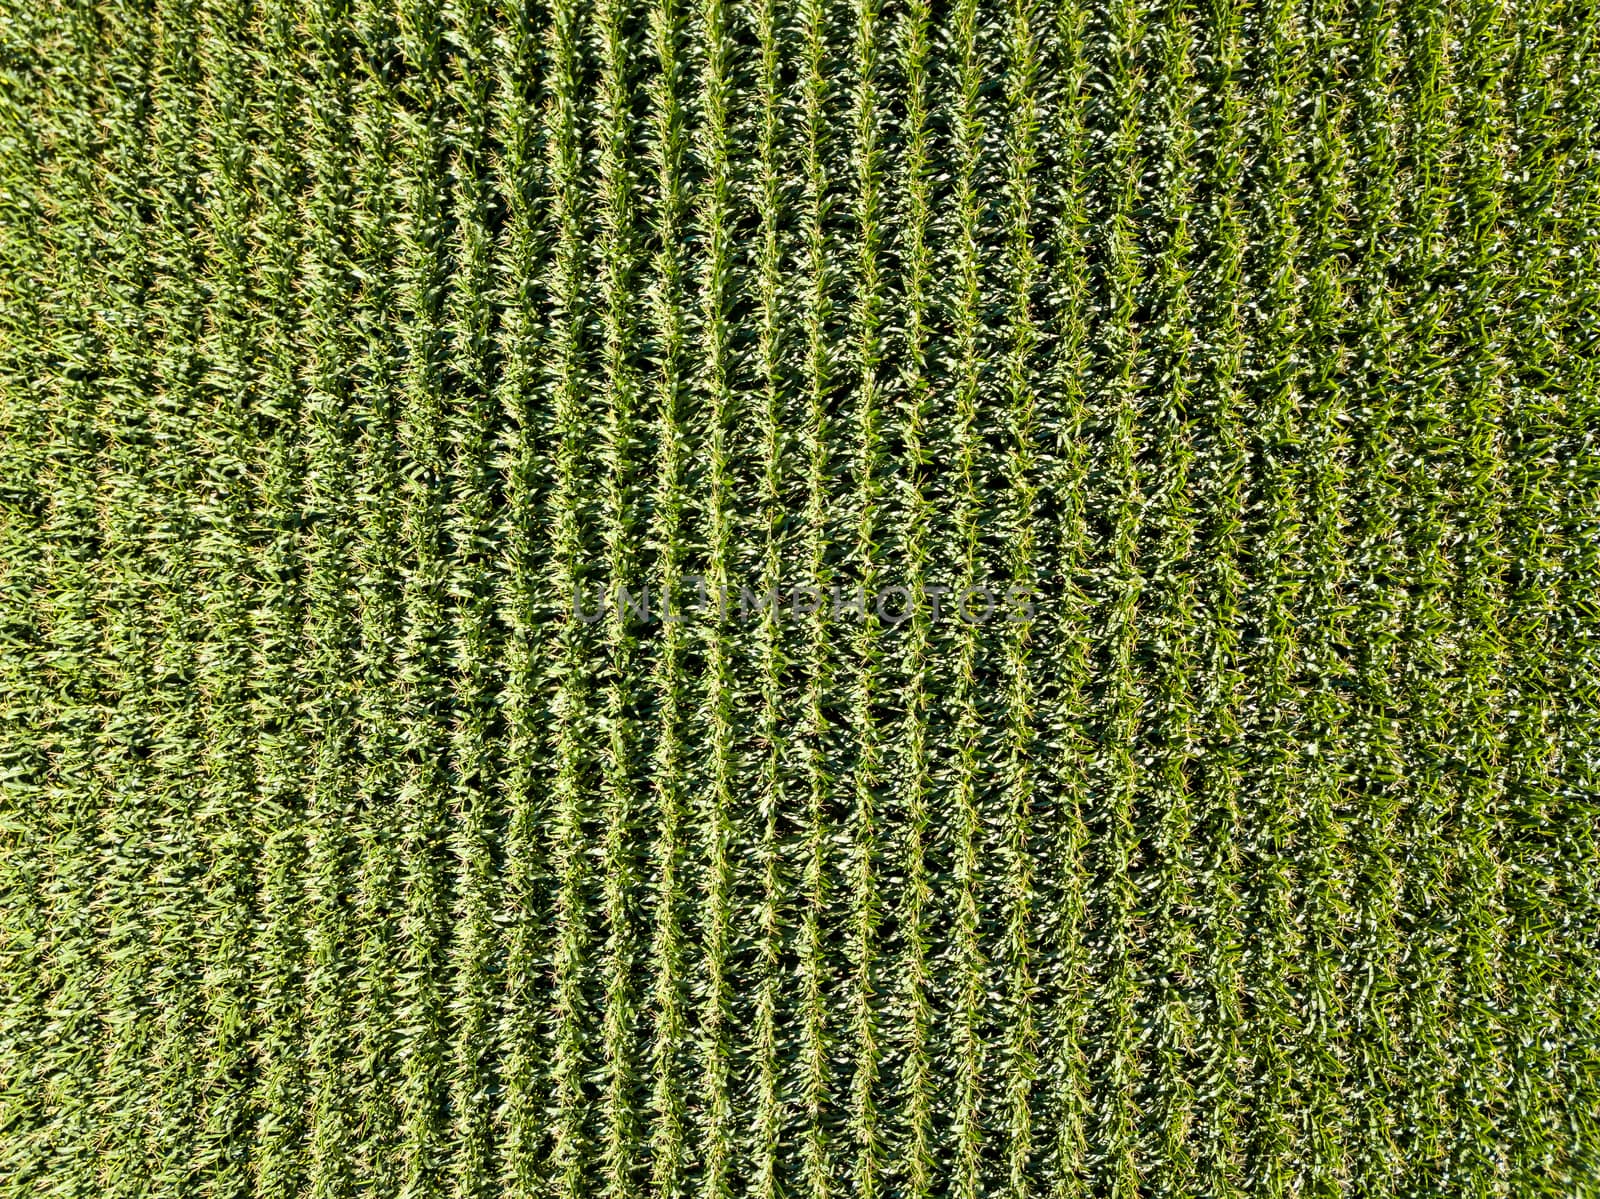 Corn field aerial view by dutourdumonde